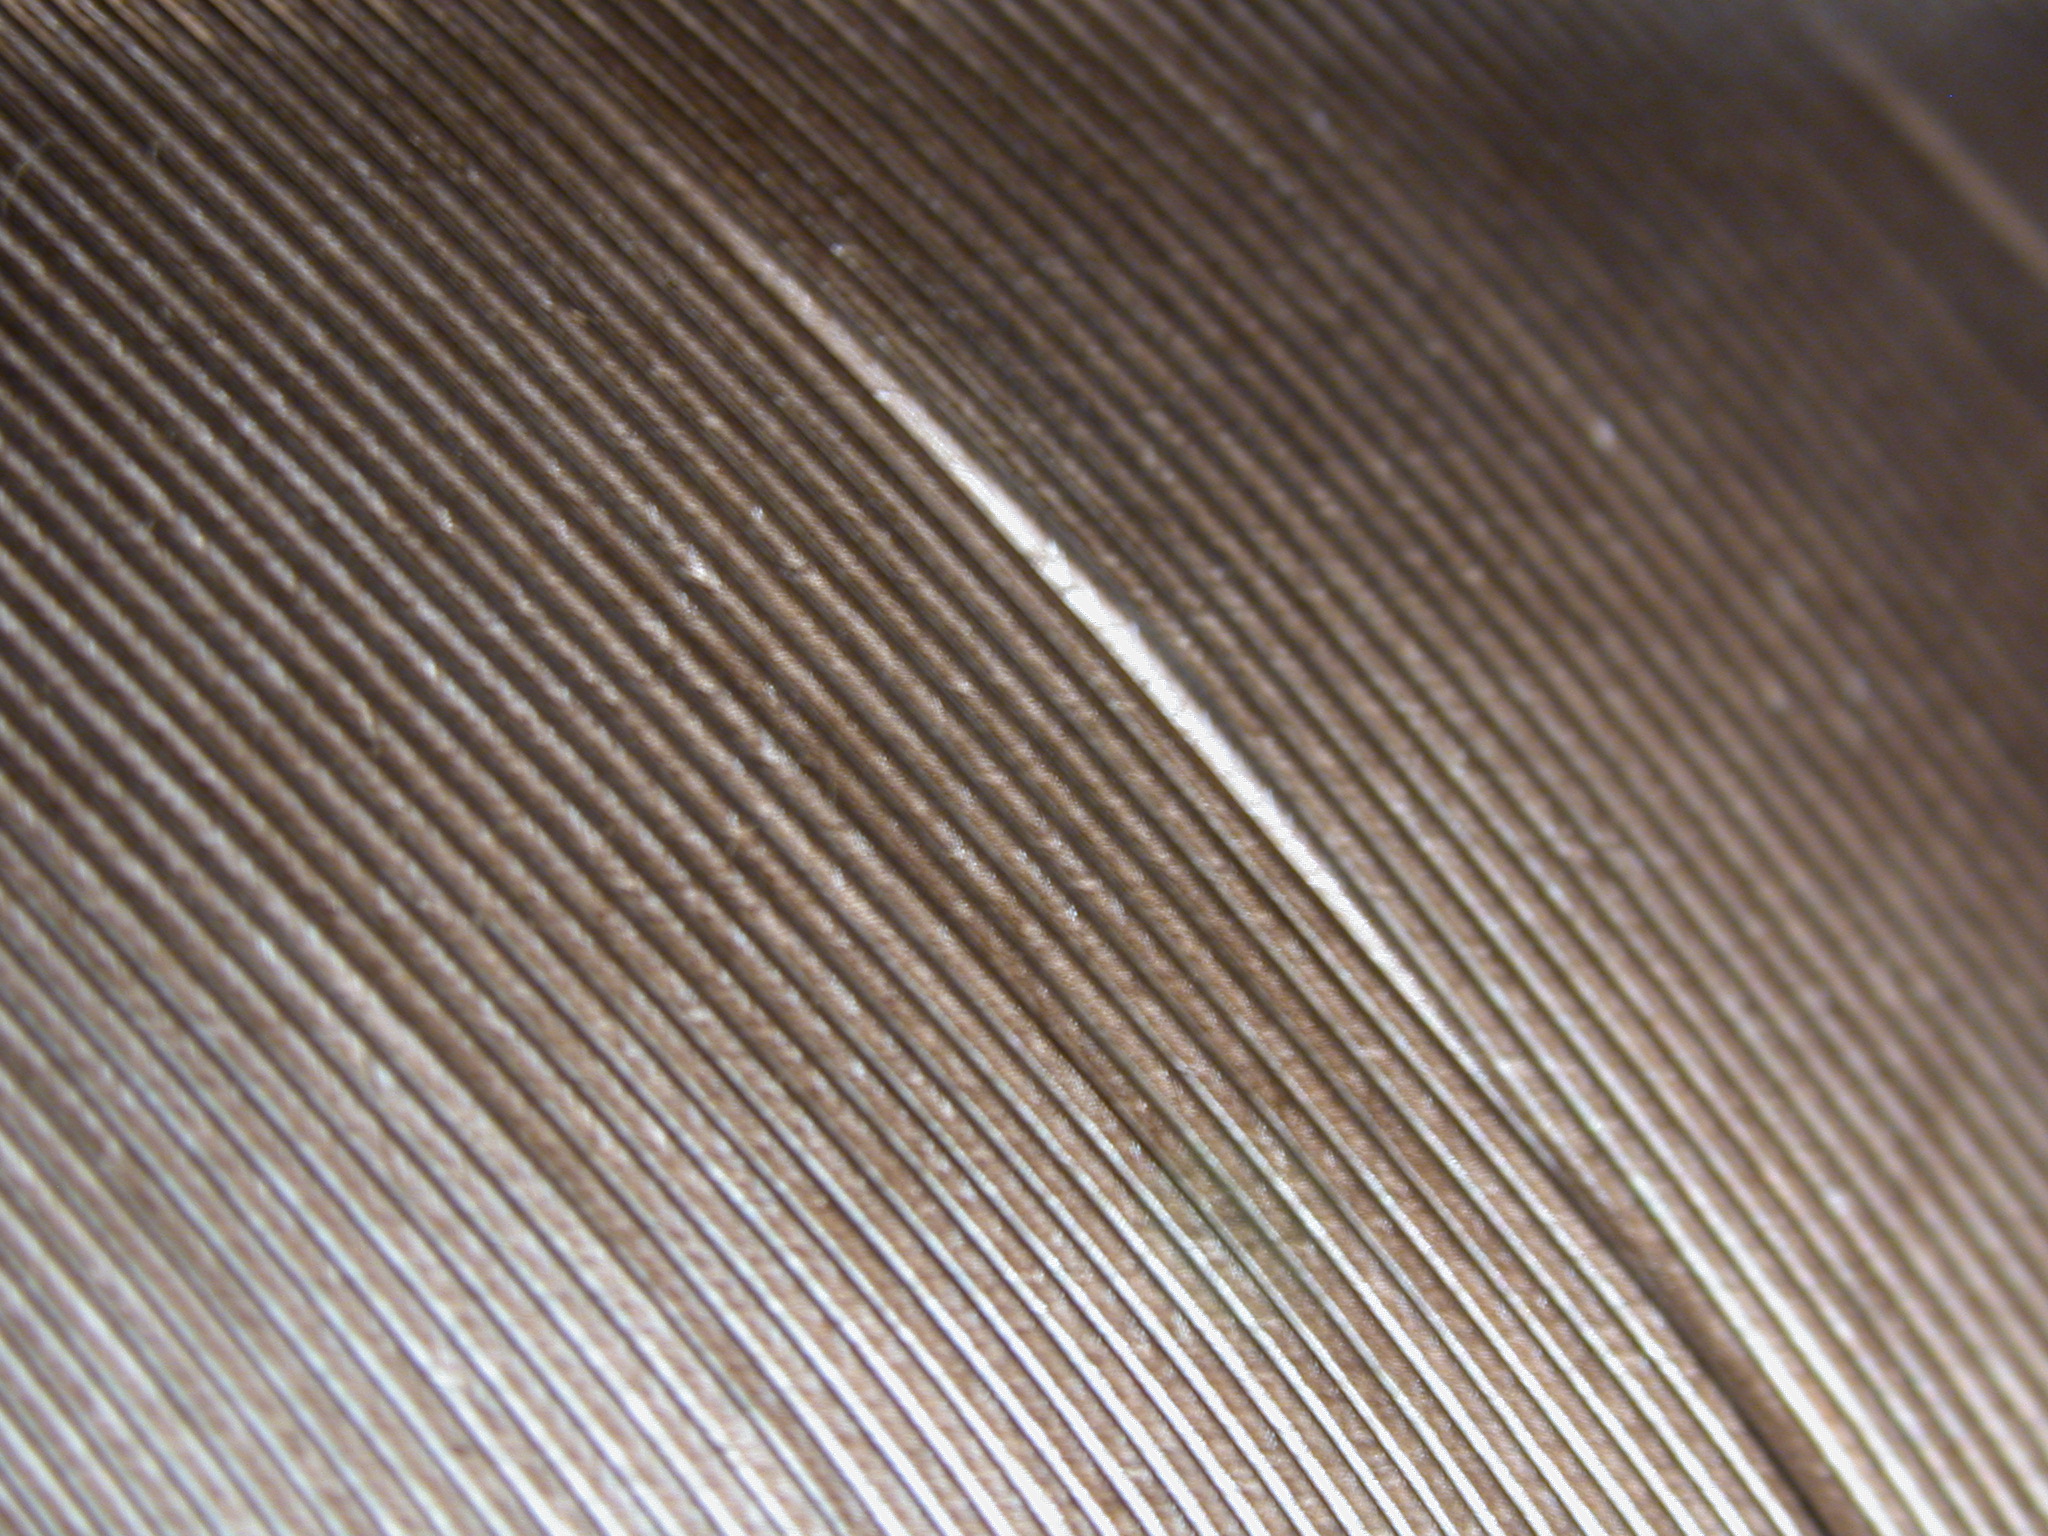 feather nature texture macro lines diagonal fur royalty